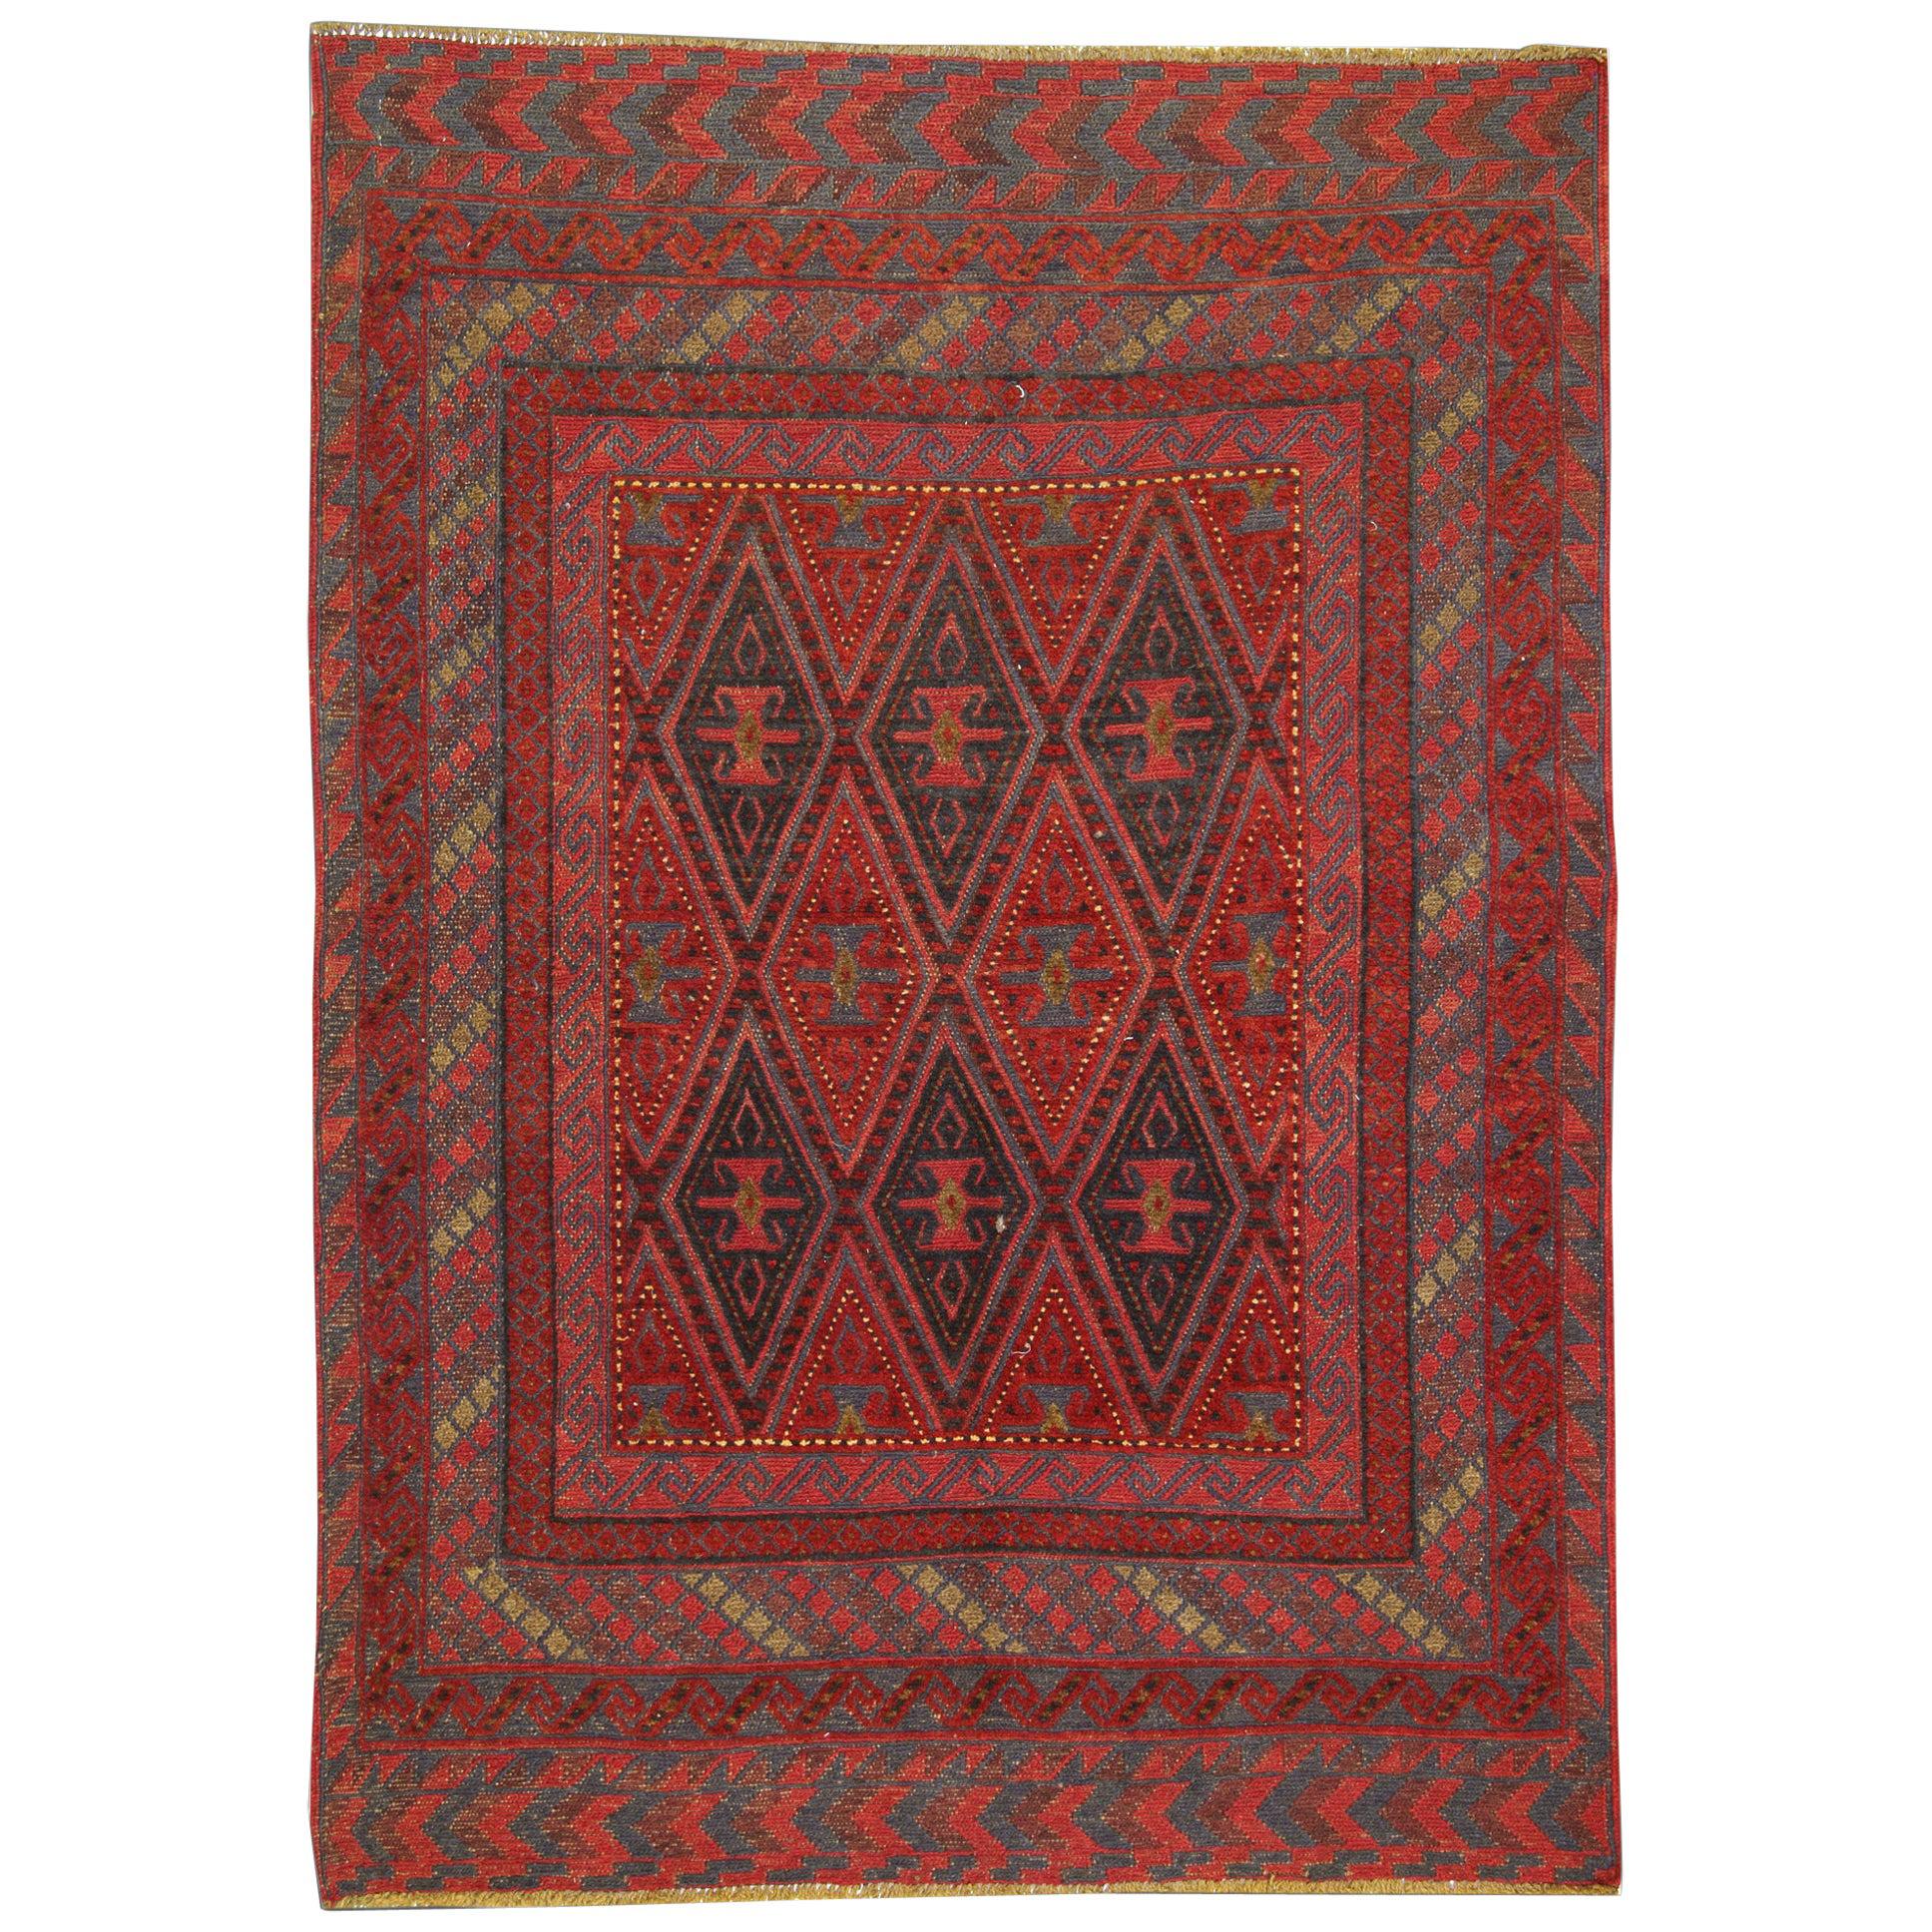 Handmade Oriental Rug Traditional Deep Red Rugs Square Turkmen Design Carpet